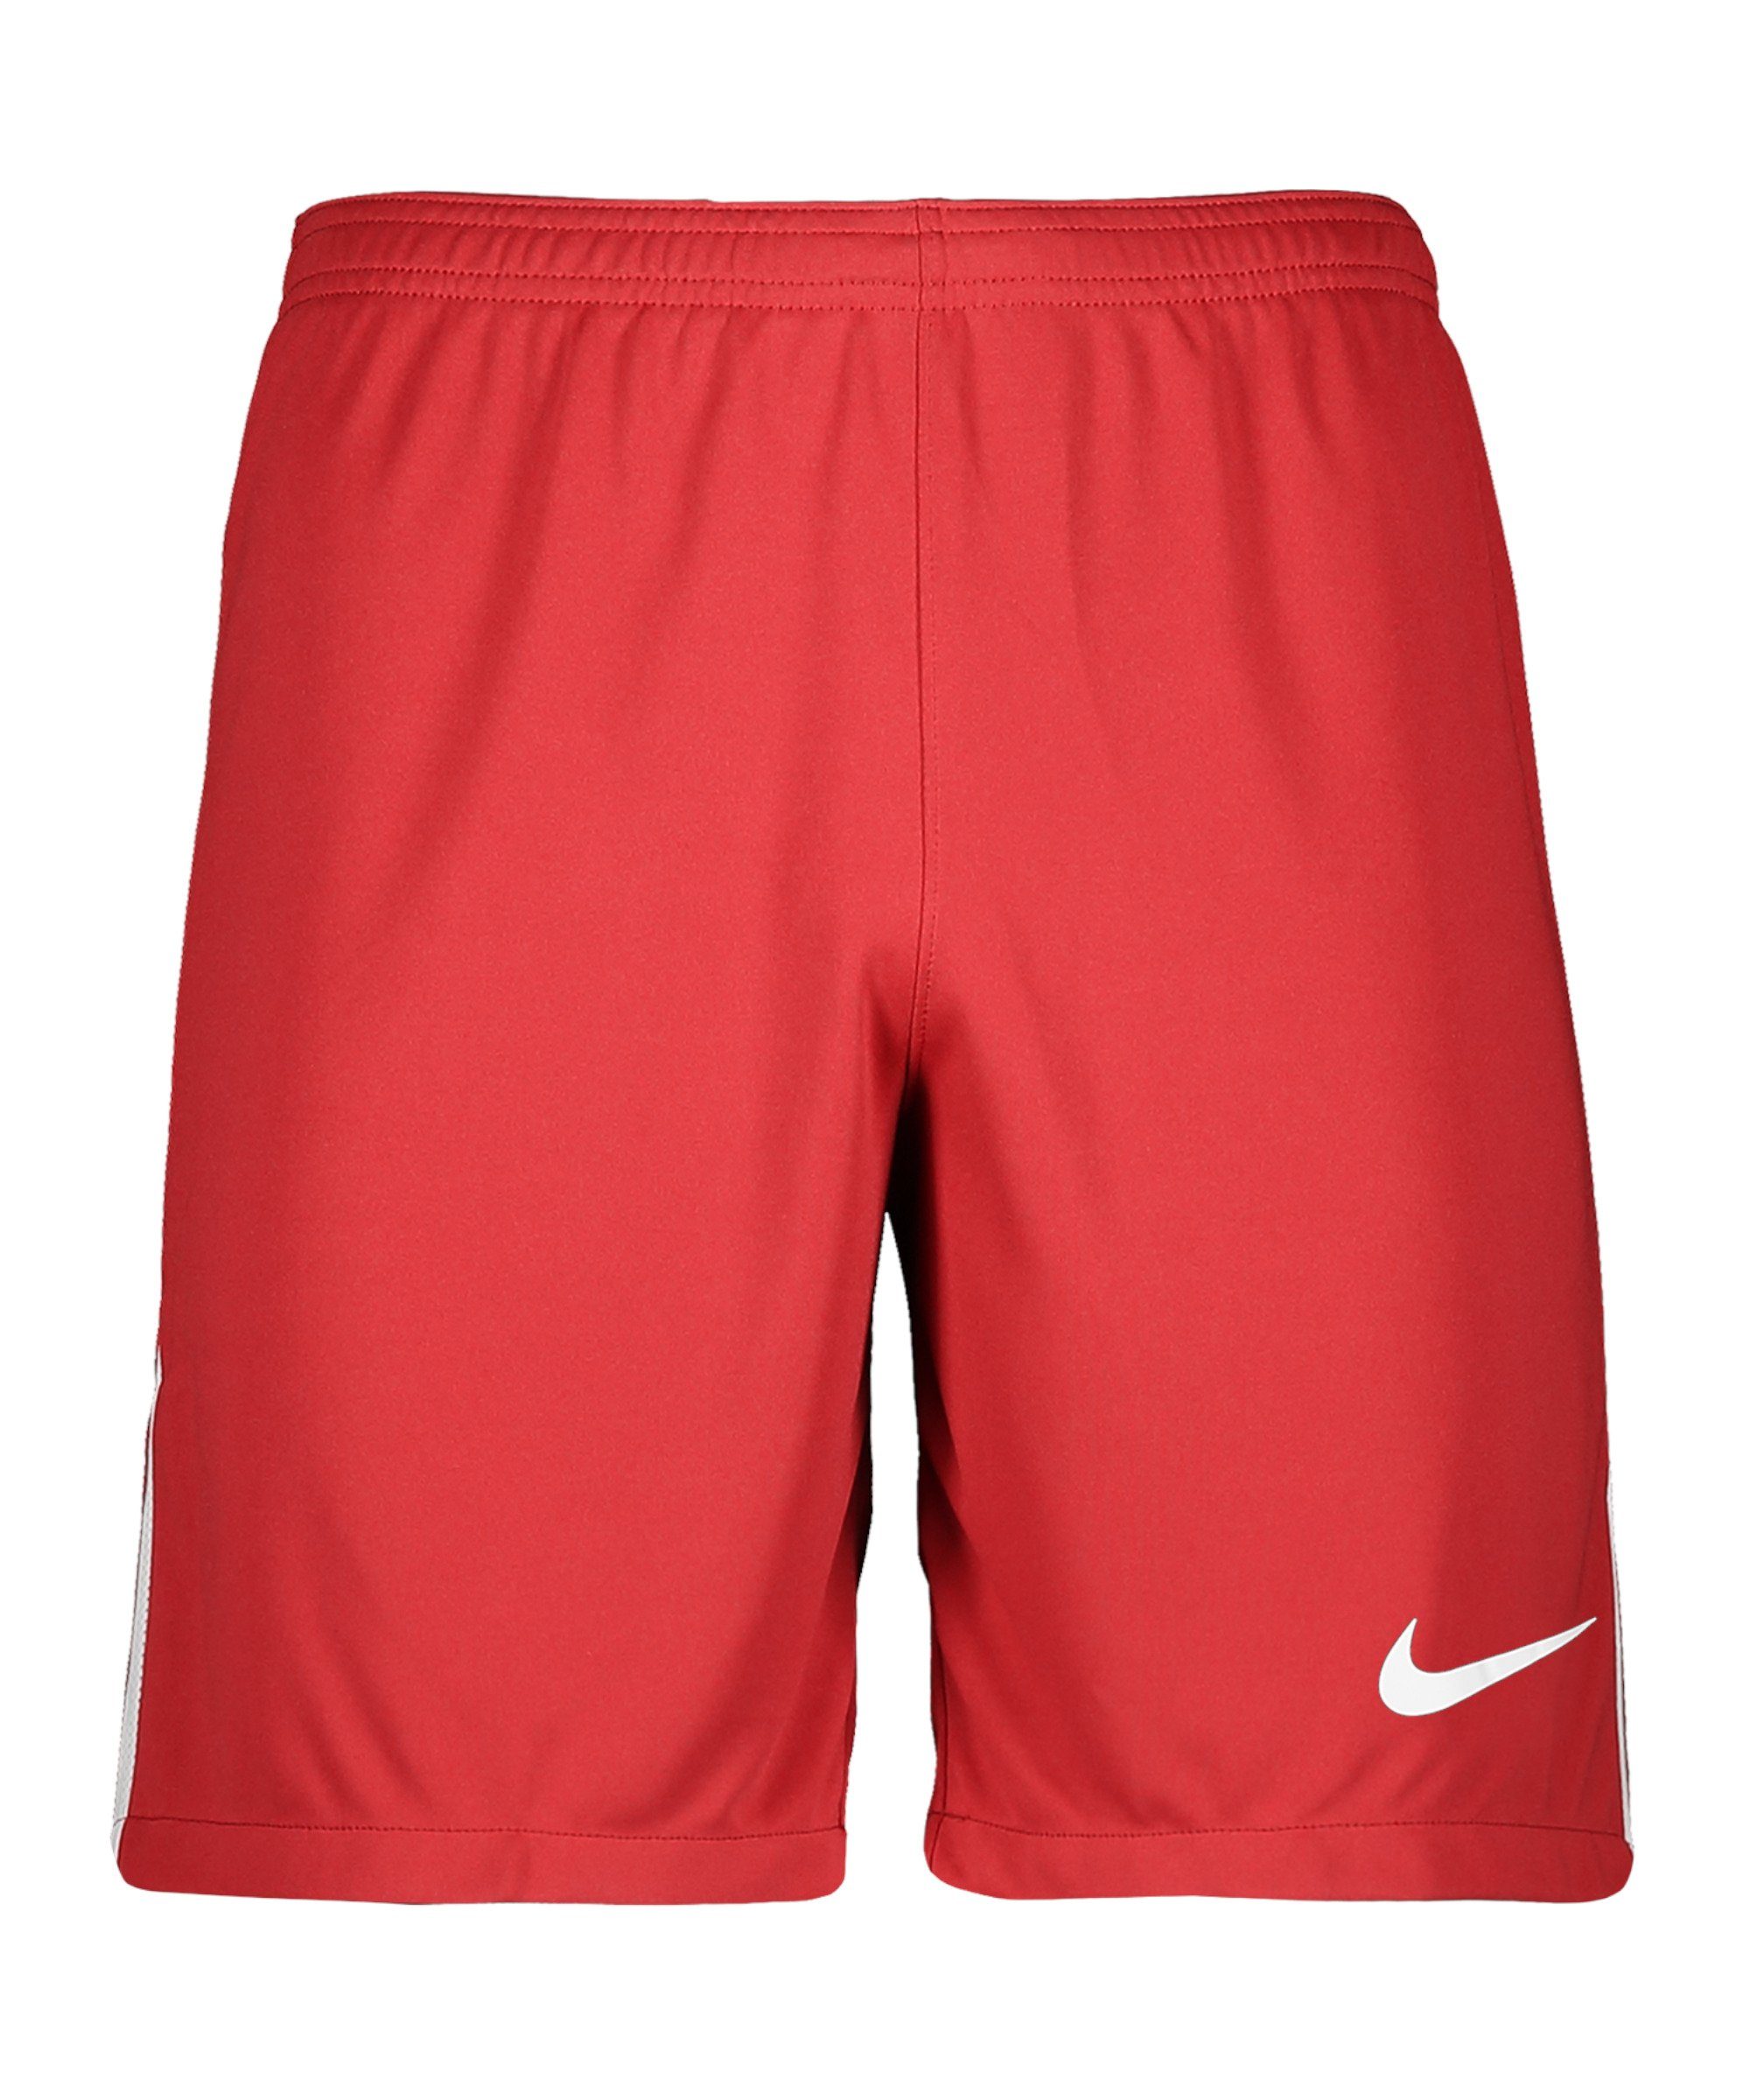 League Sporthose Short III rotweissweiss Nike